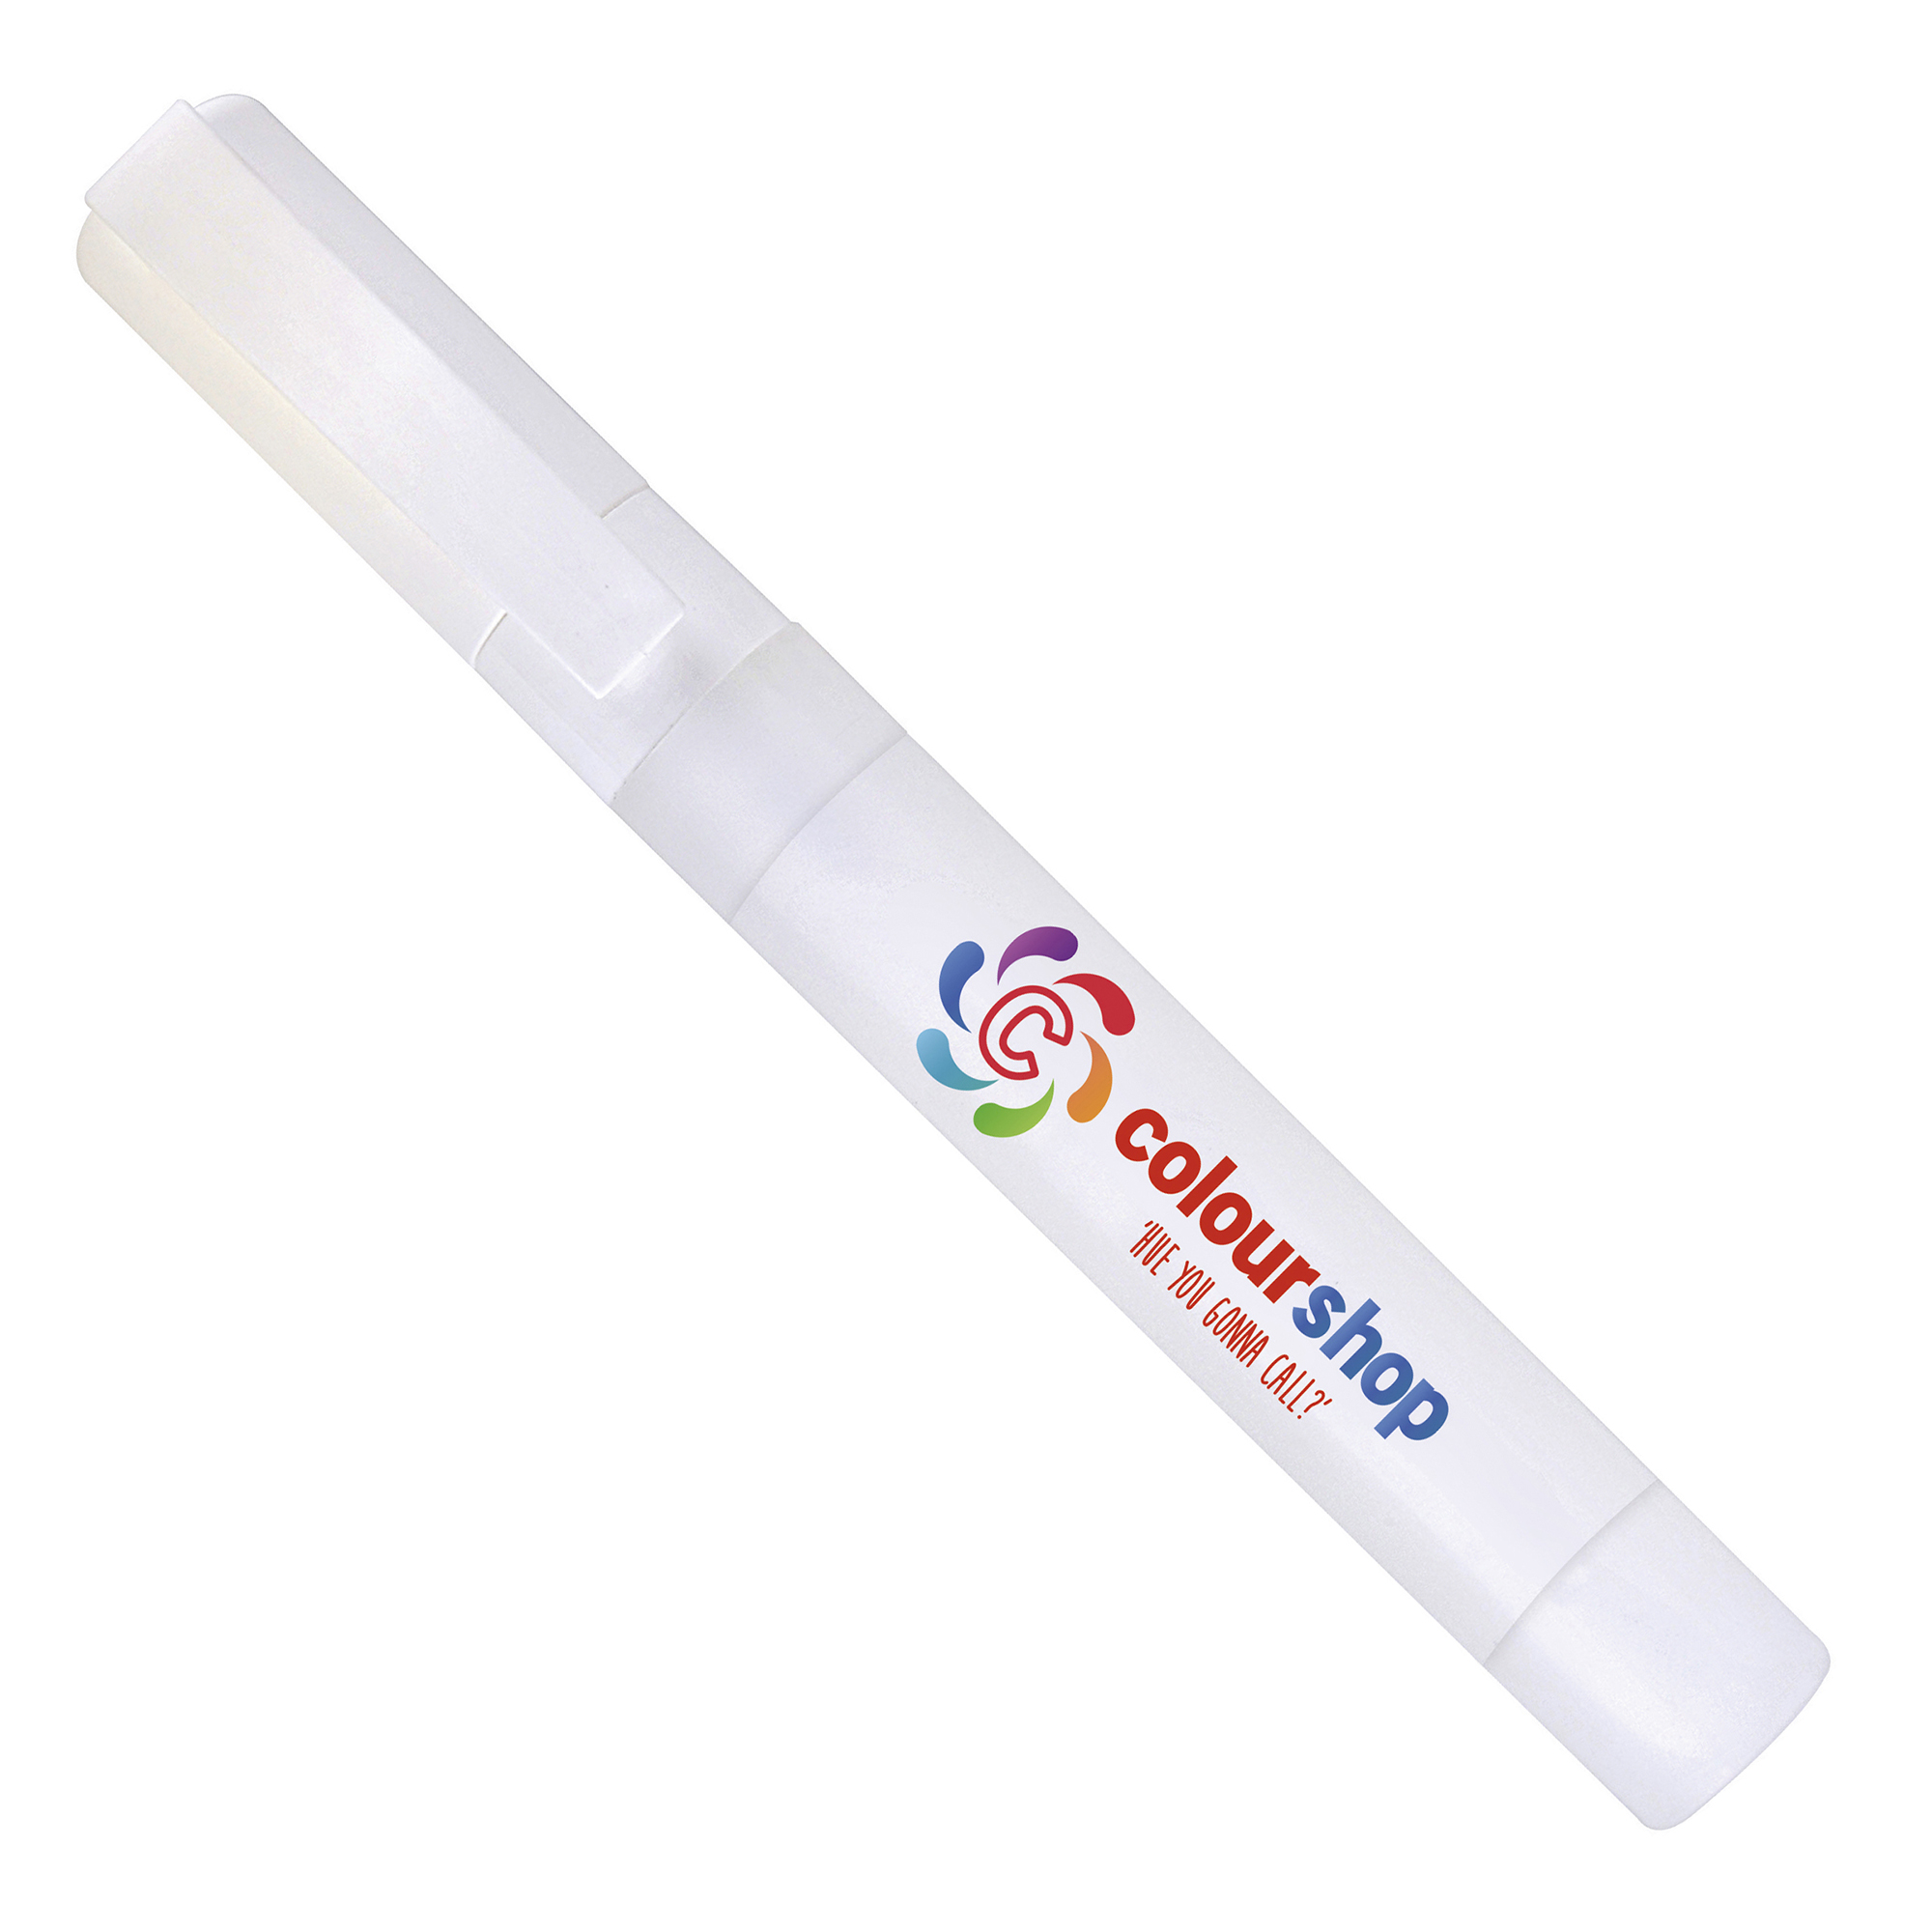 Branded Pen Sanitizer